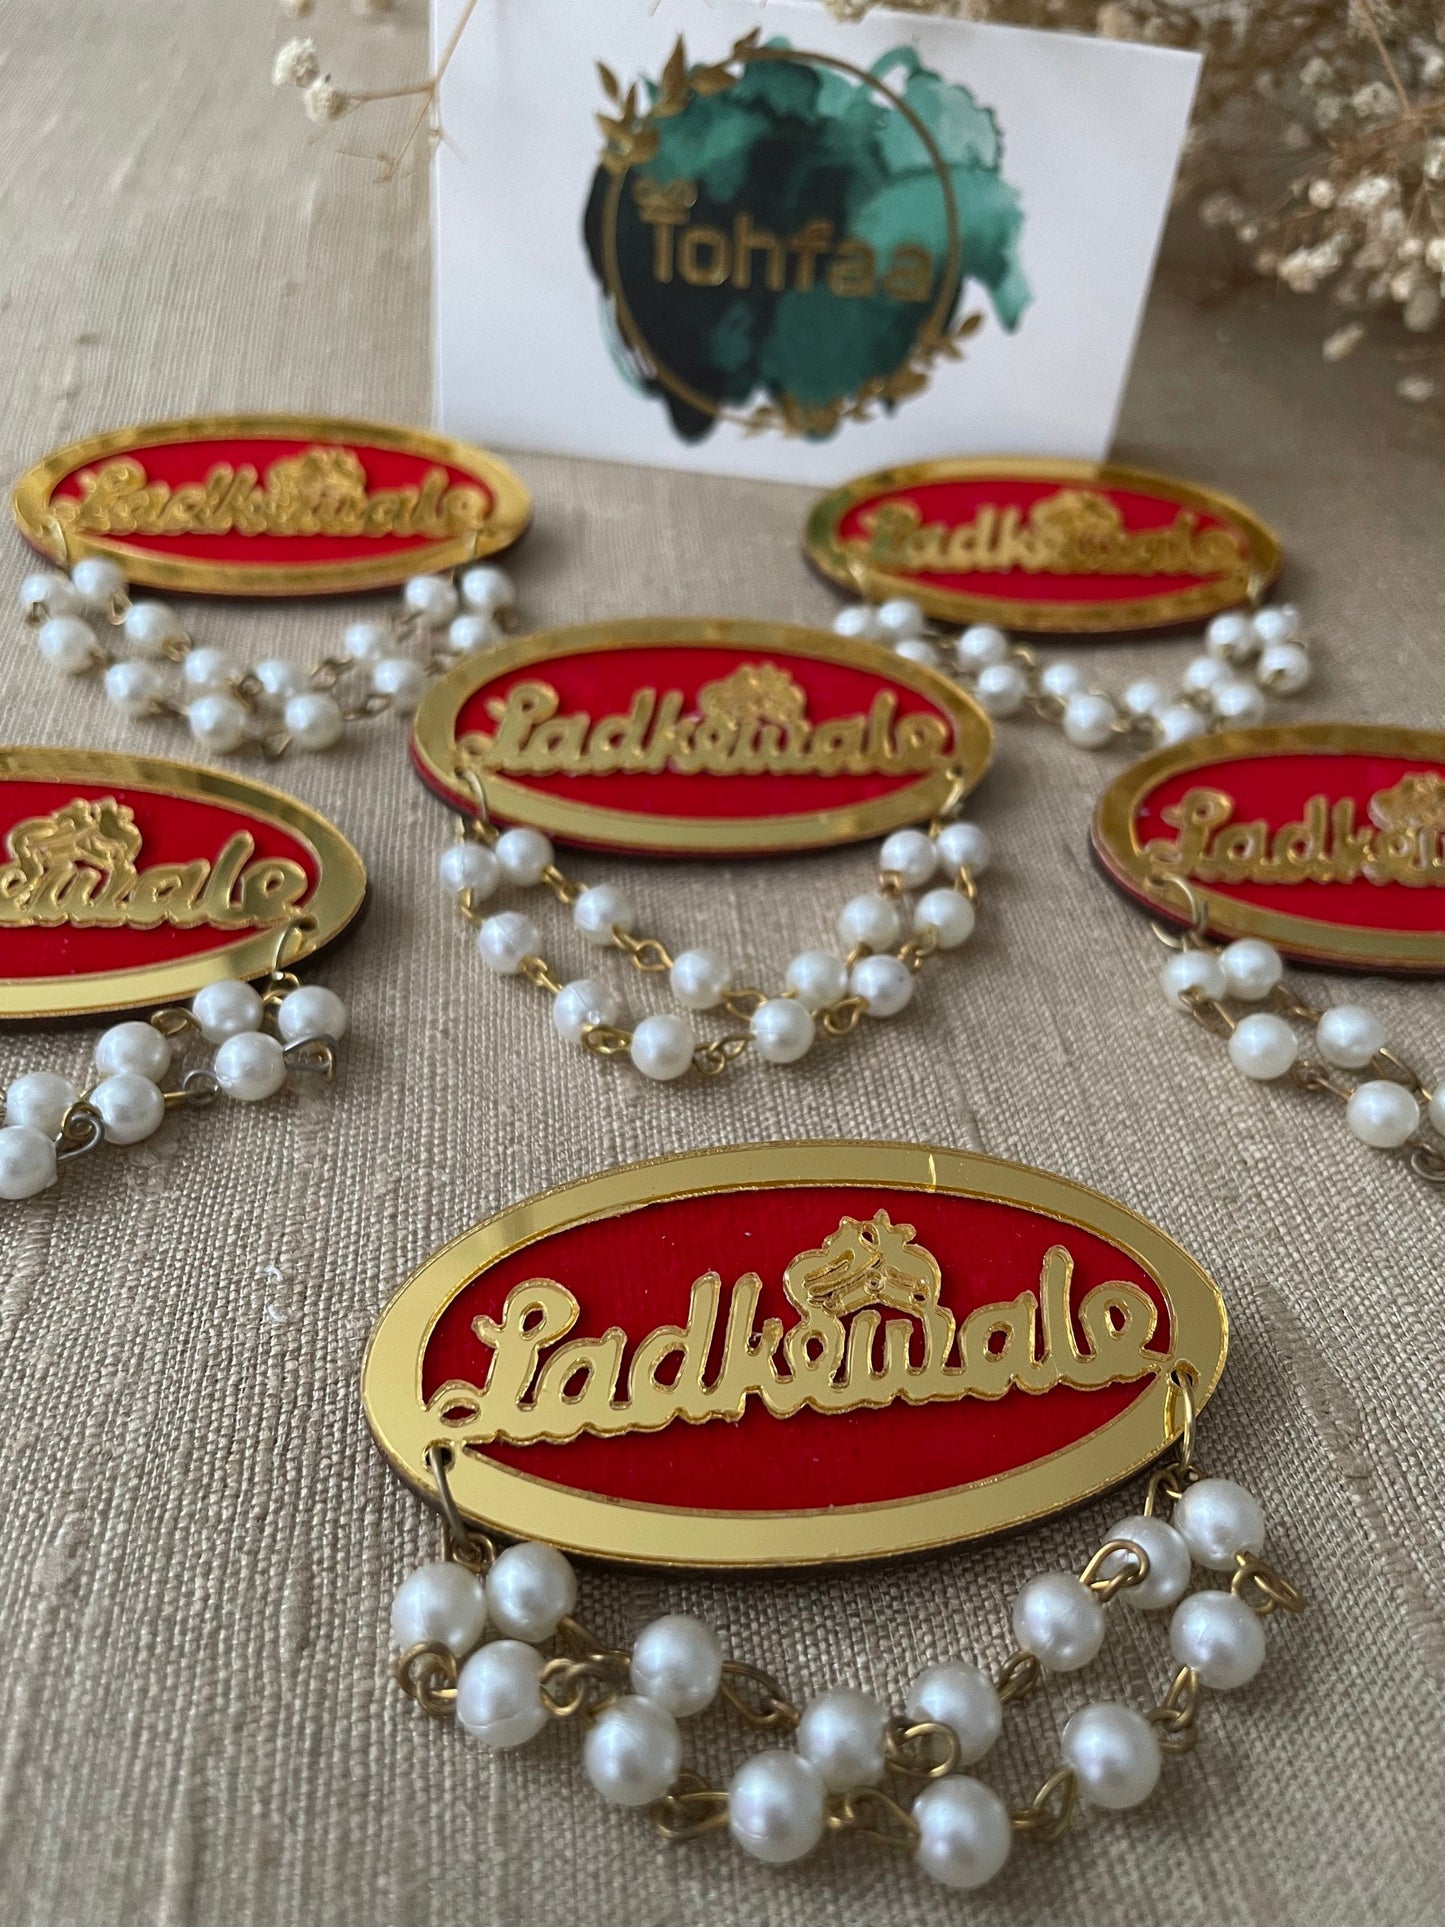 LADKEWALE Indian Wedding Brooches Grooms-side Safety Pins Glitter look Mehendi Shaadi Baraat Wedding Favors